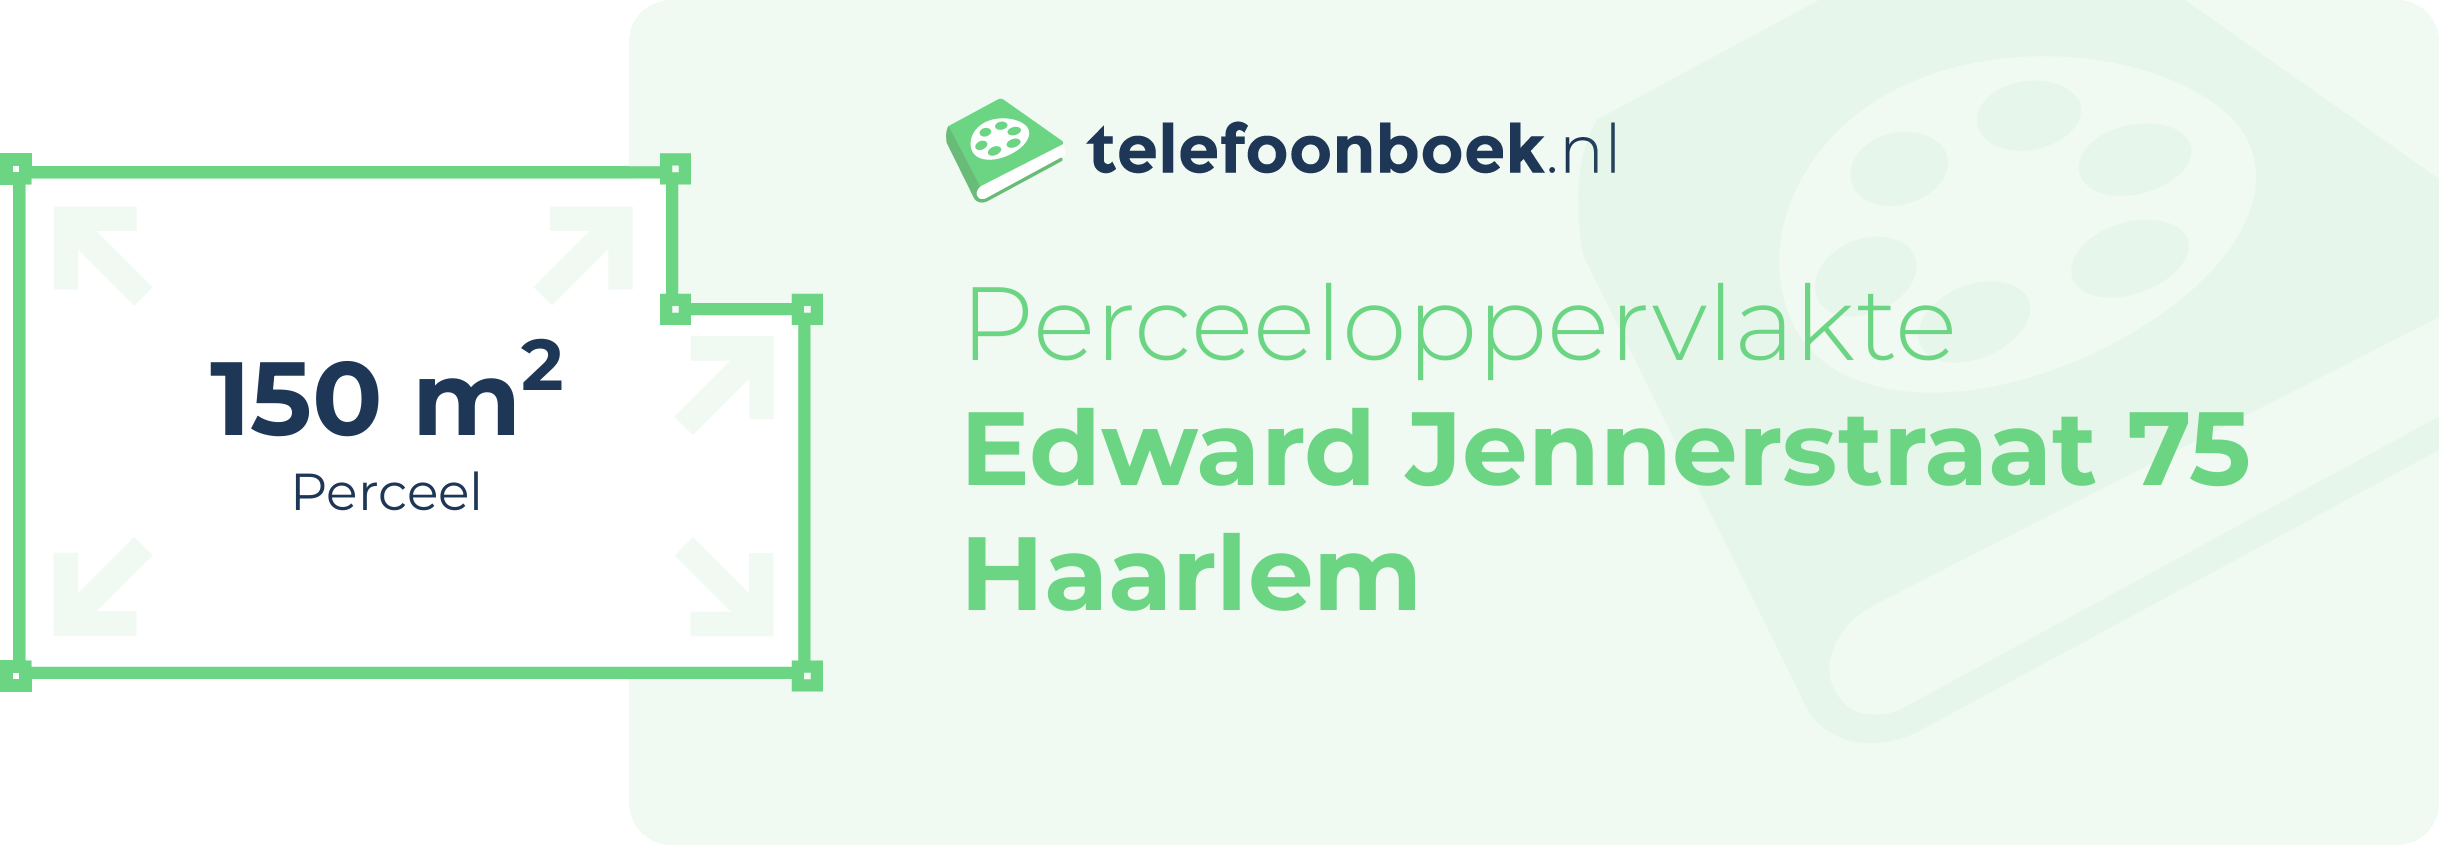 Perceeloppervlakte Edward Jennerstraat 75 Haarlem